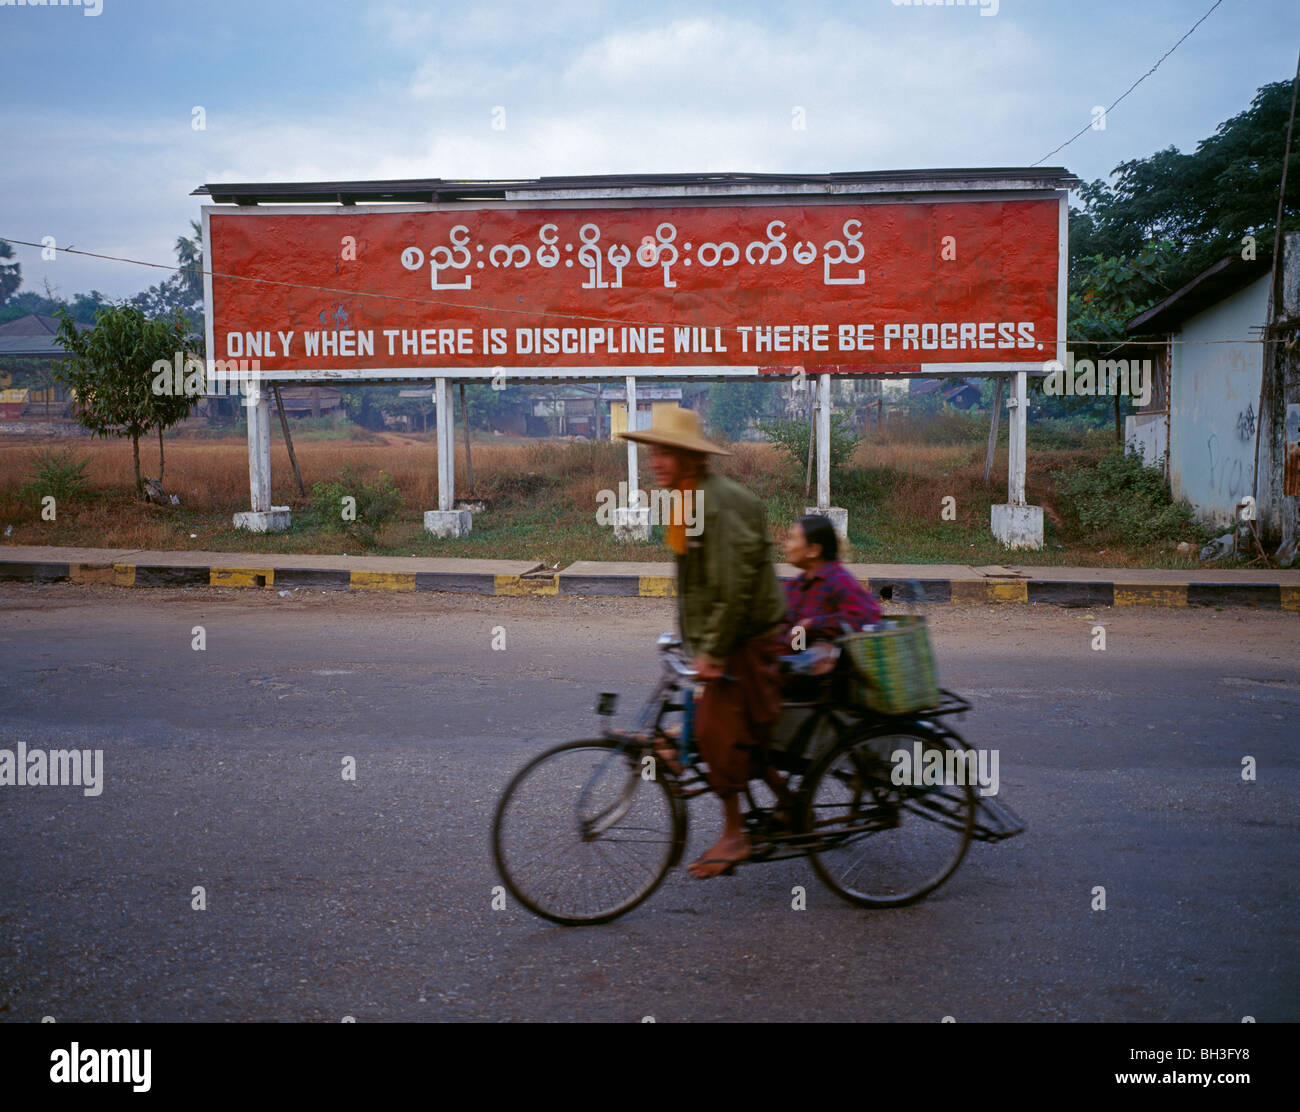 Slogan of the government in a street demanding more discipline for achieving more progress Parole der Regierung Myanmar Burma Stock Photo